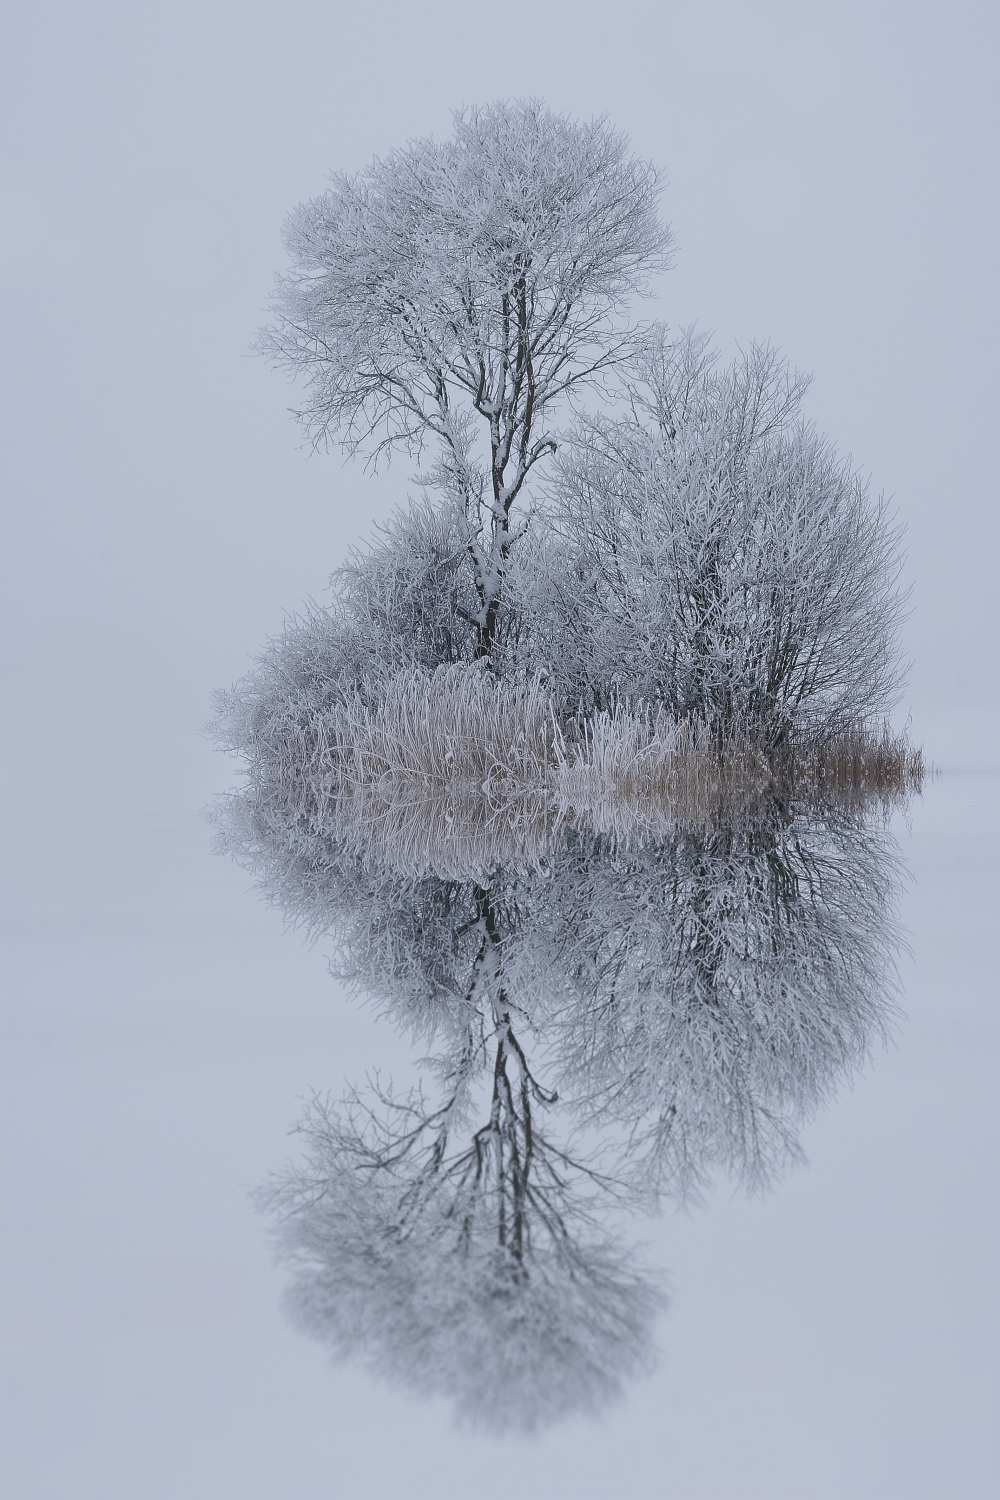 winter stillness von Norbert Maier